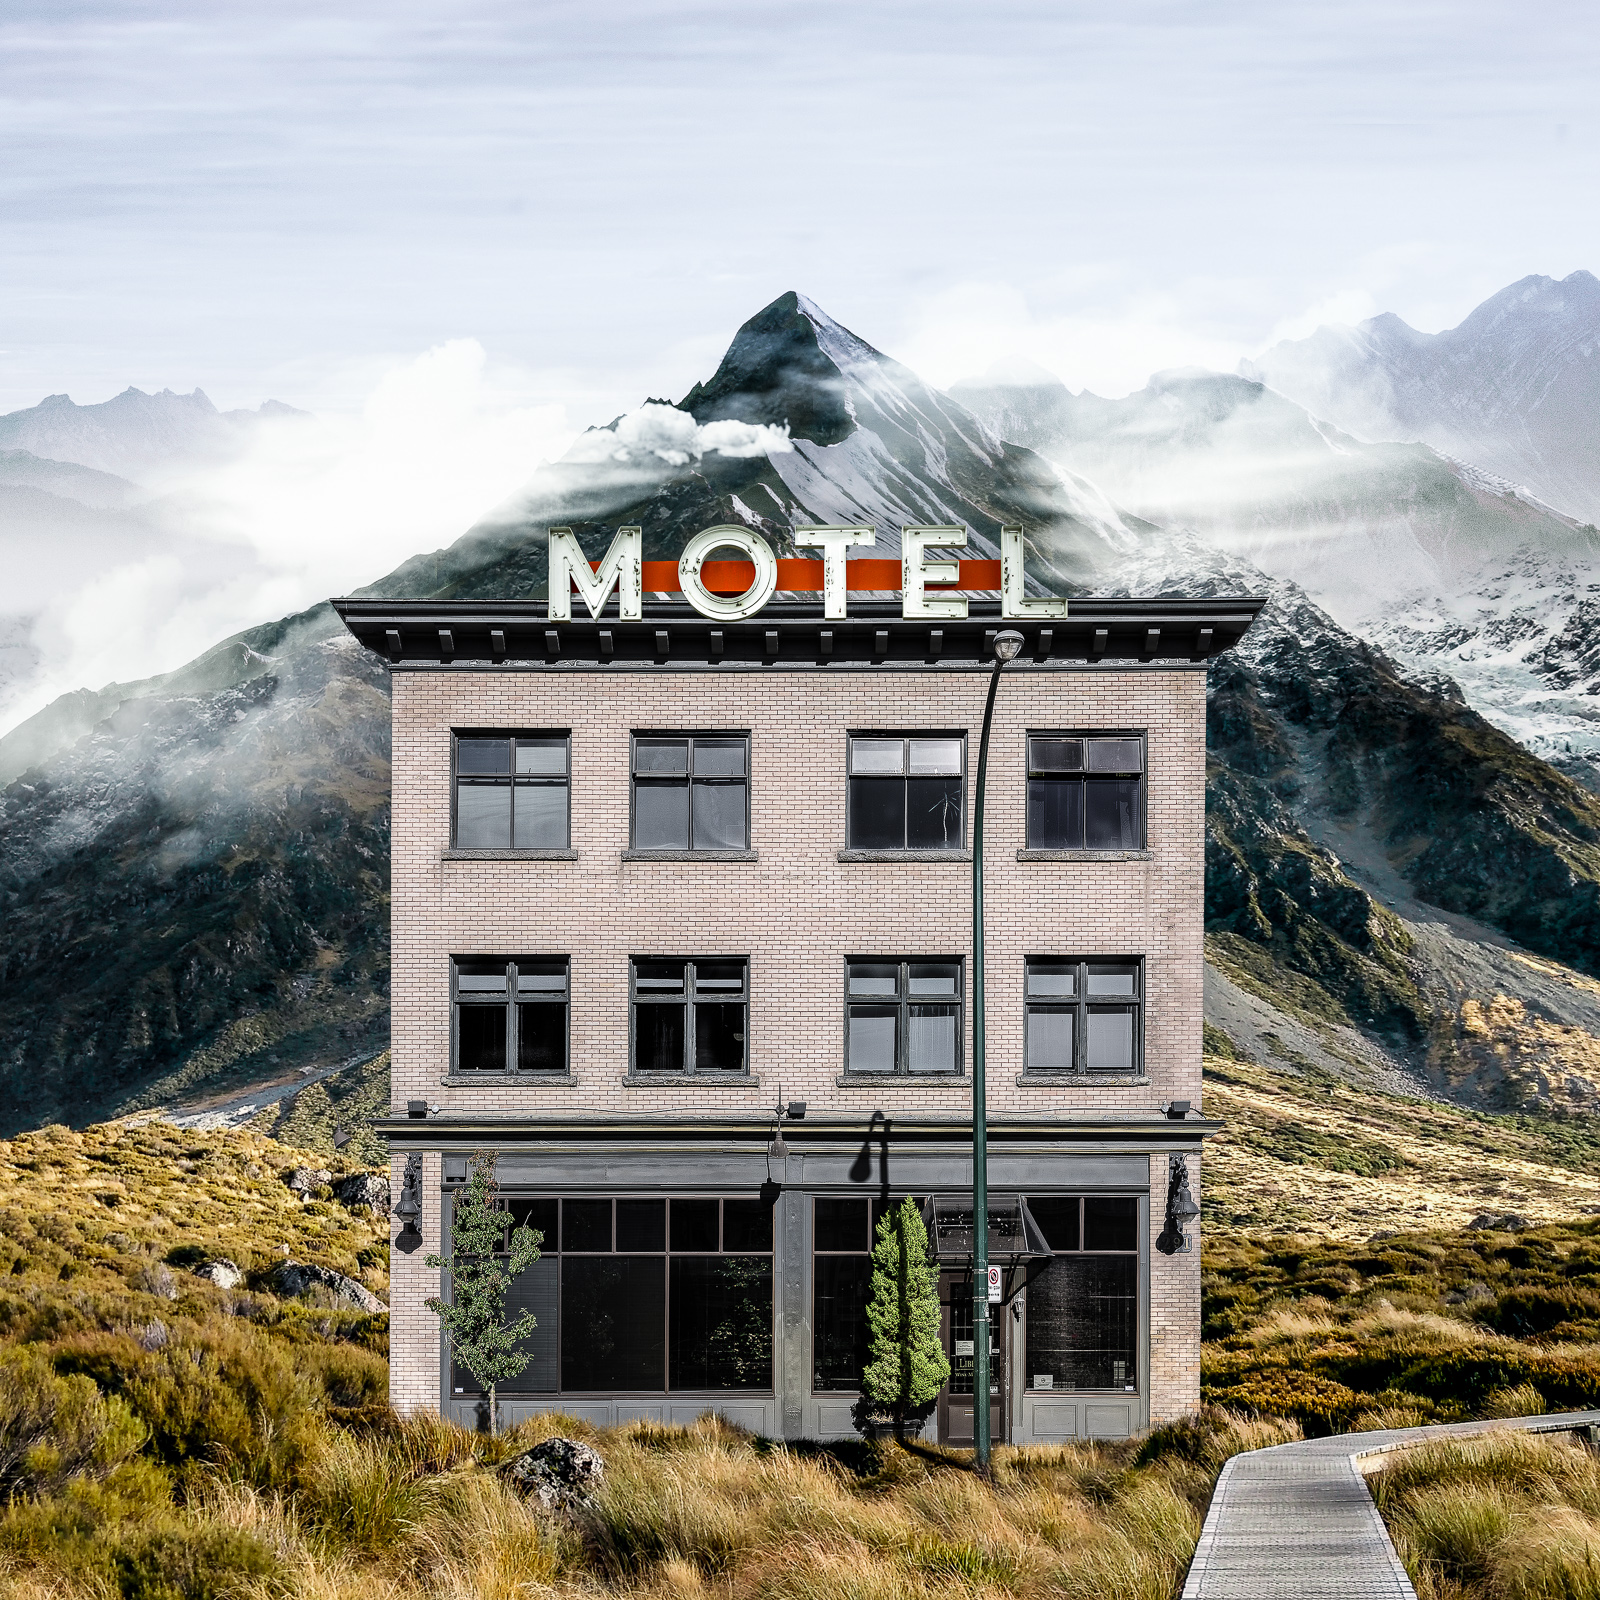 Mountaintop Motel